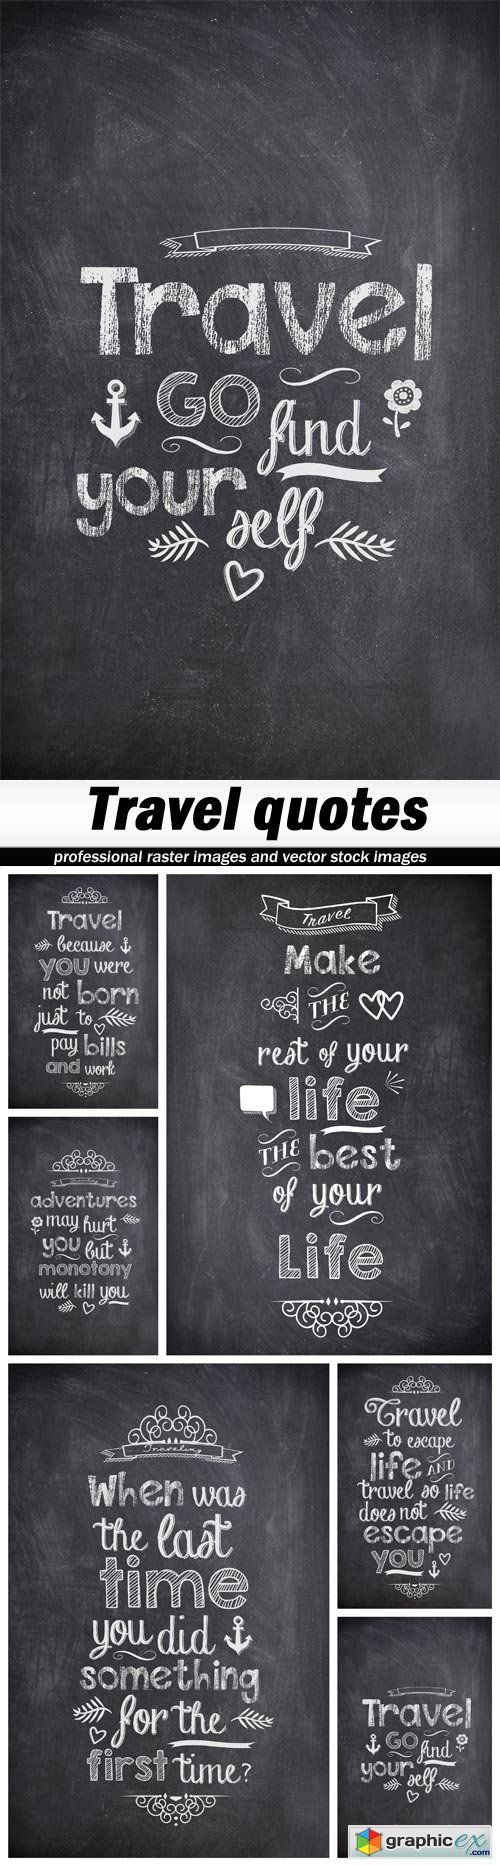 Travel quotes - 6 UHQ JPEG